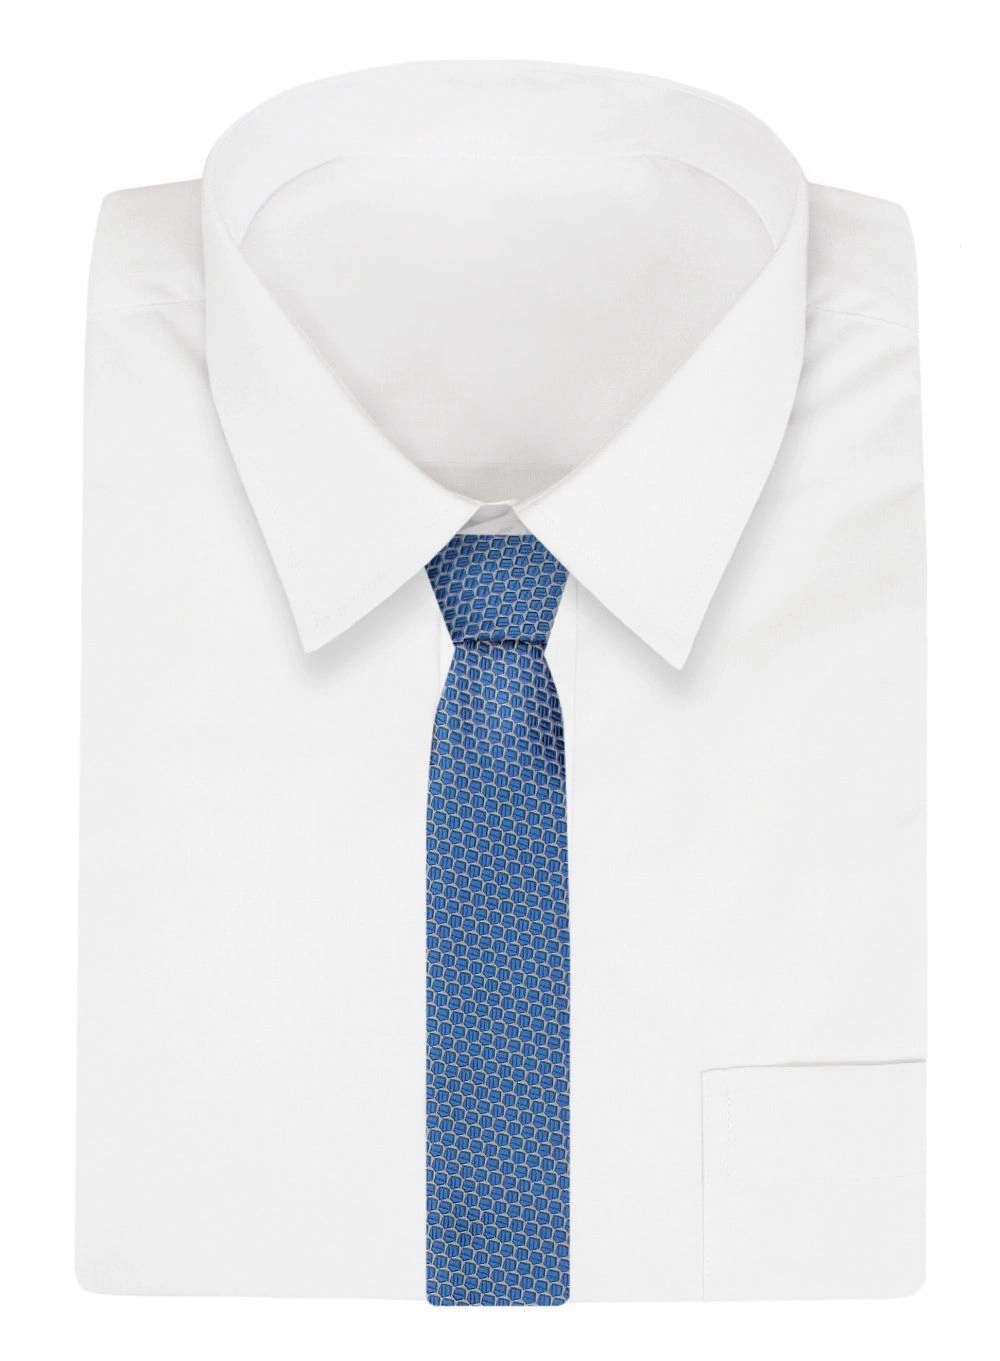 Krawat - ALTIES - Niebieski, Regularny Wzór